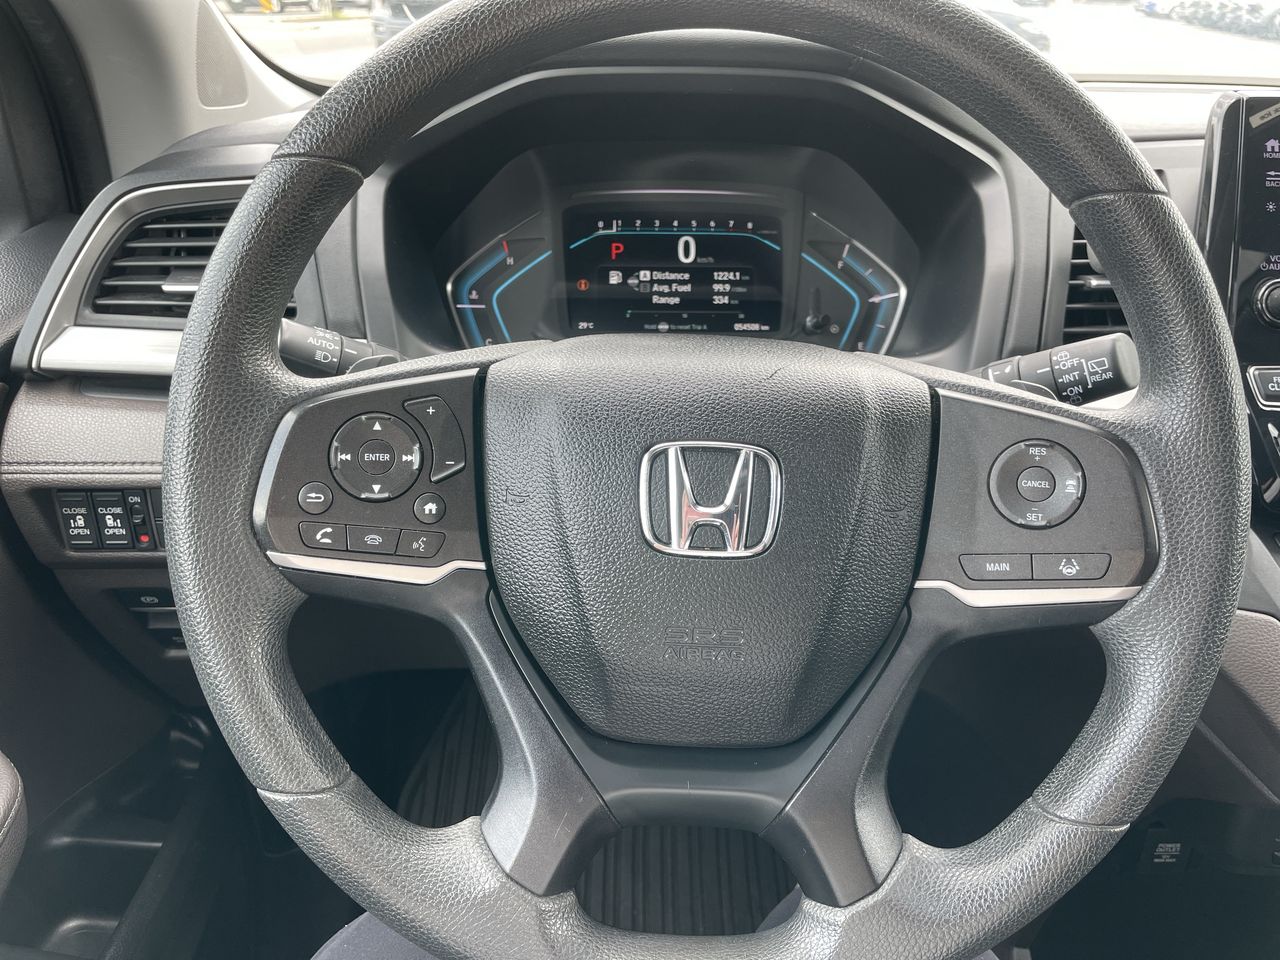 2019 Honda Odyssey - P21095 Full Image 14